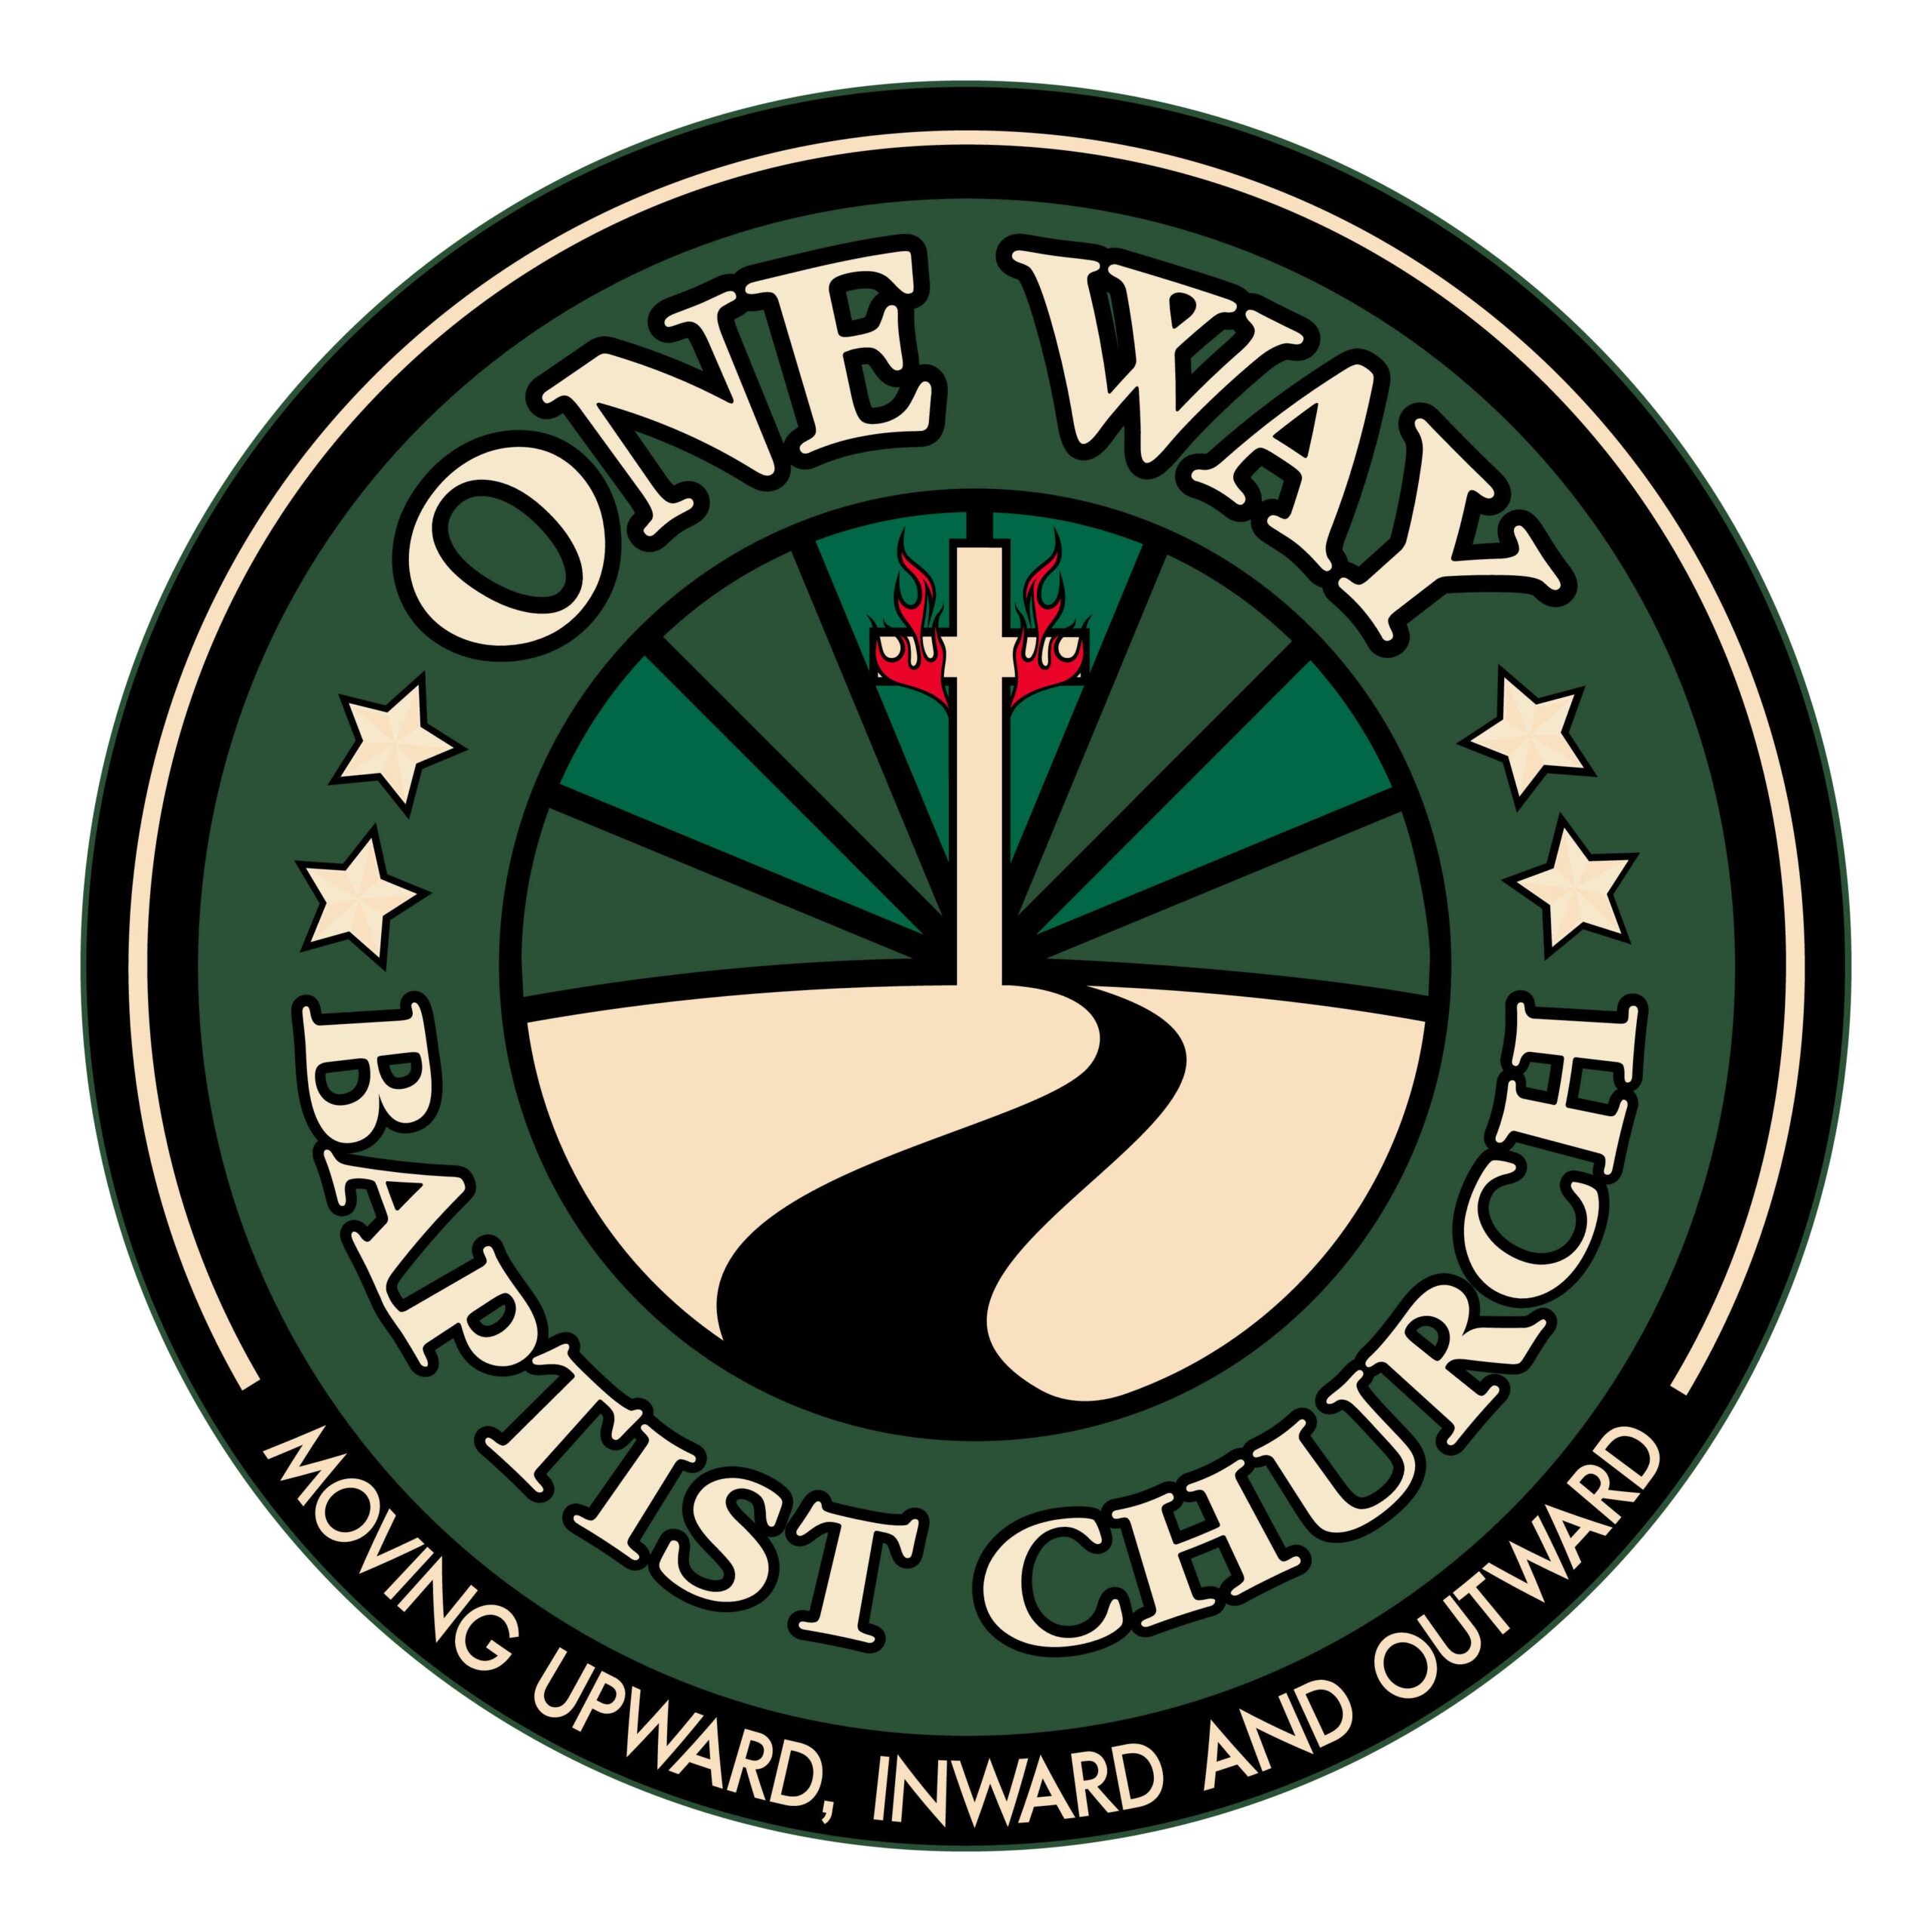 One Way Baptist Church